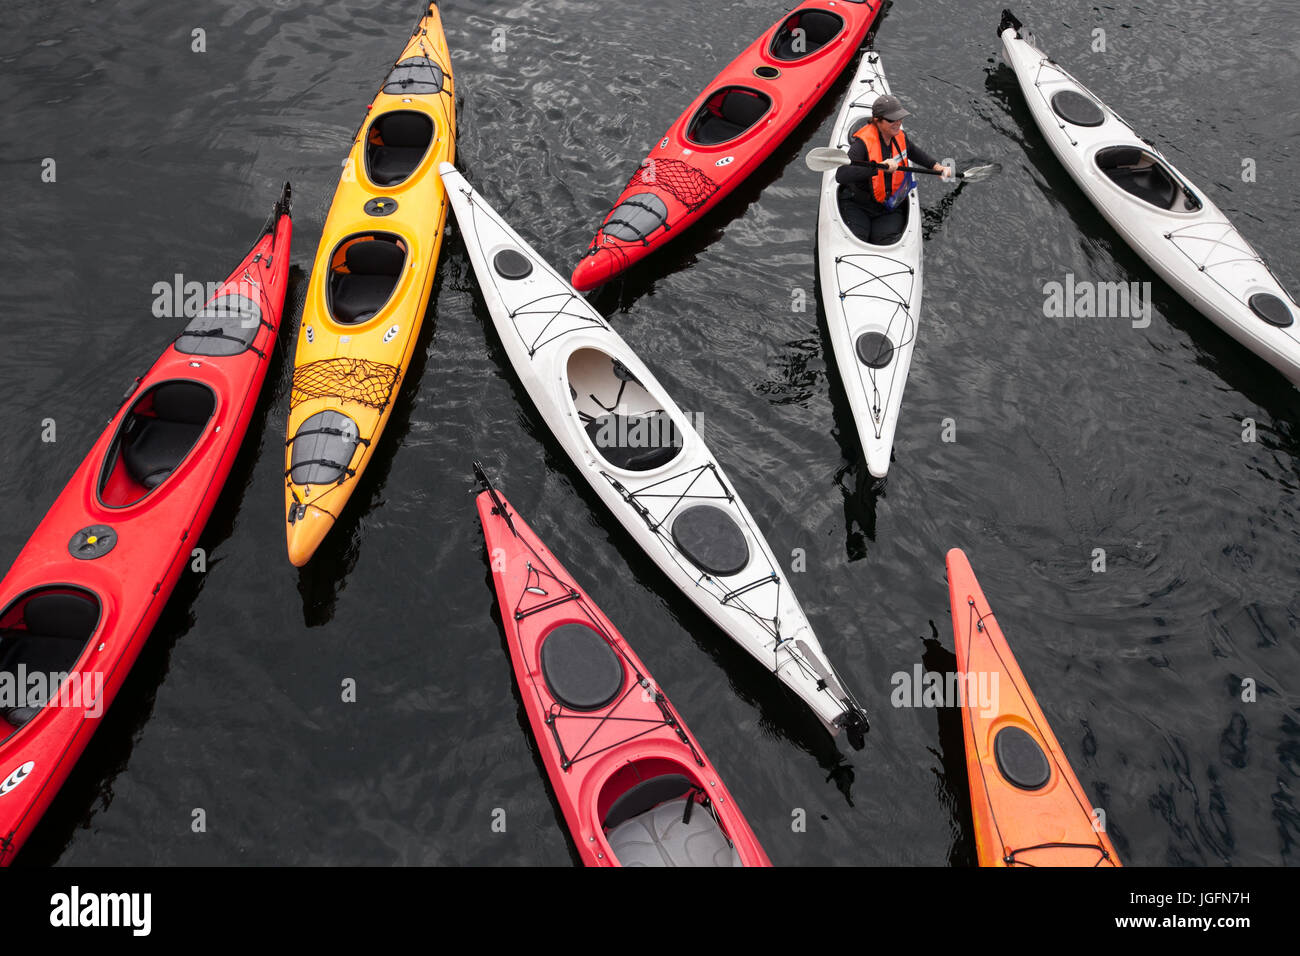 A kayaker maneuvers a kayak among many other colorful kayaks. Stock Photo